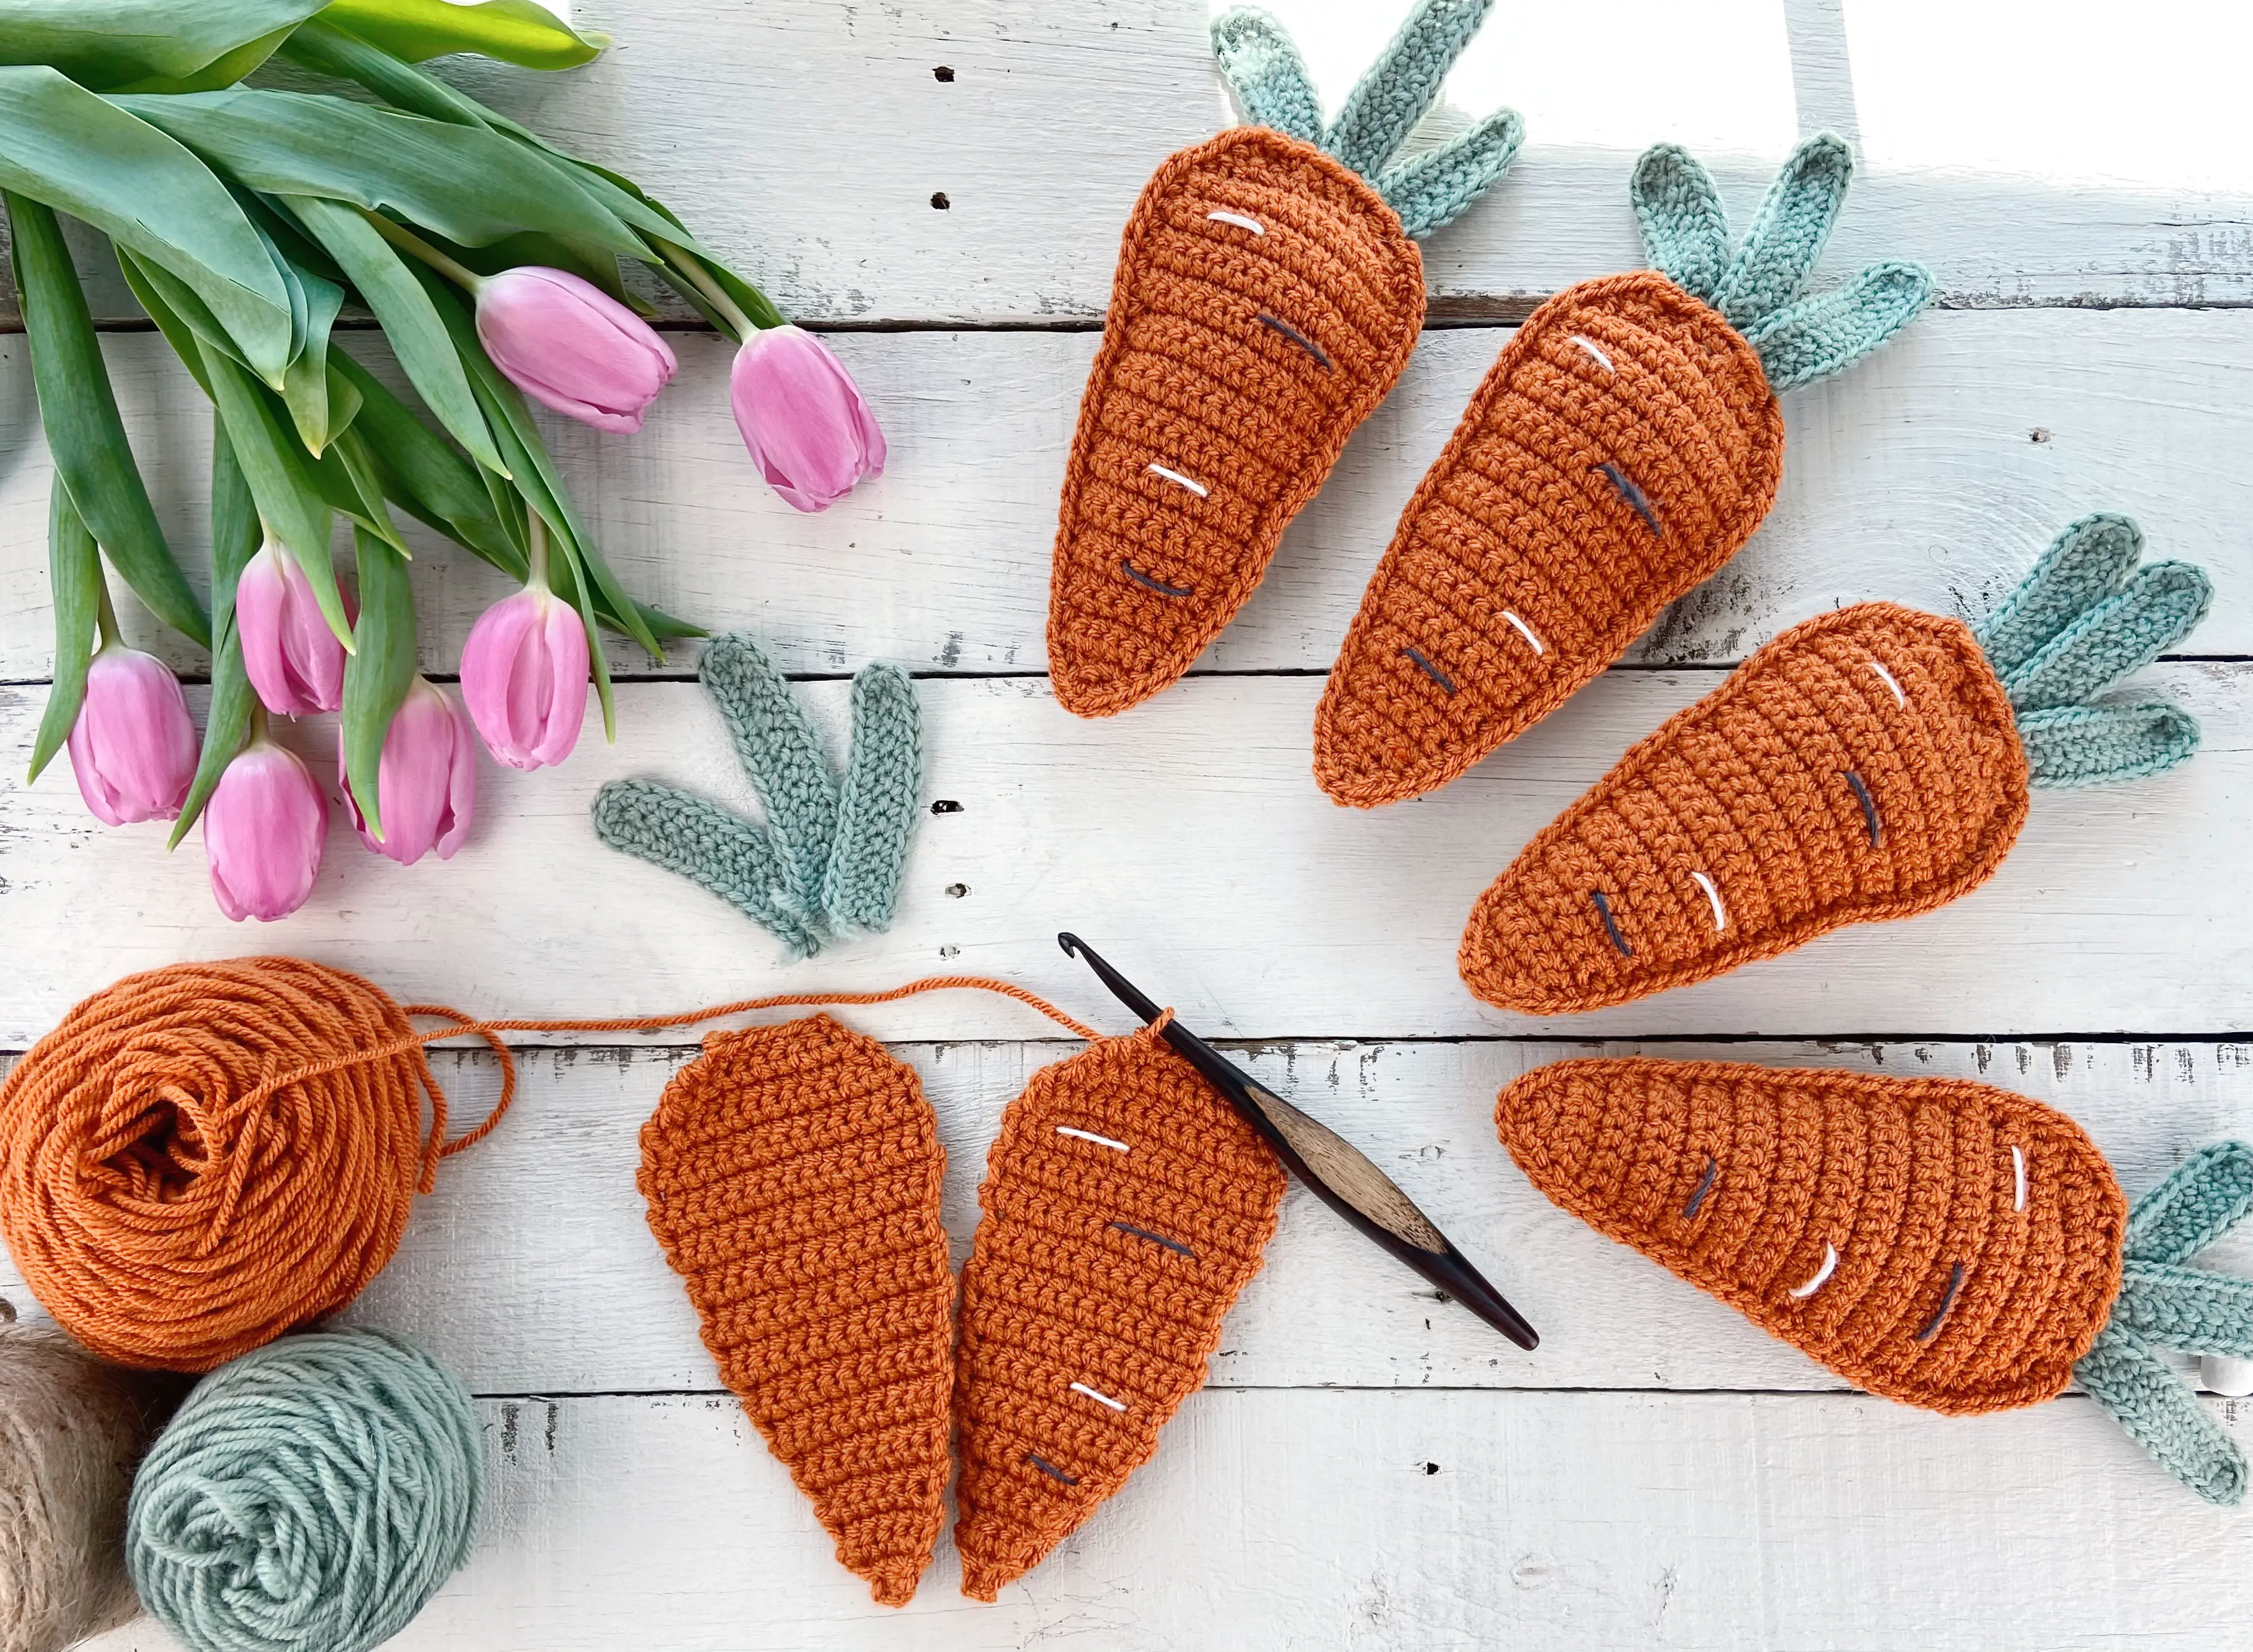 How to make crochet carrots